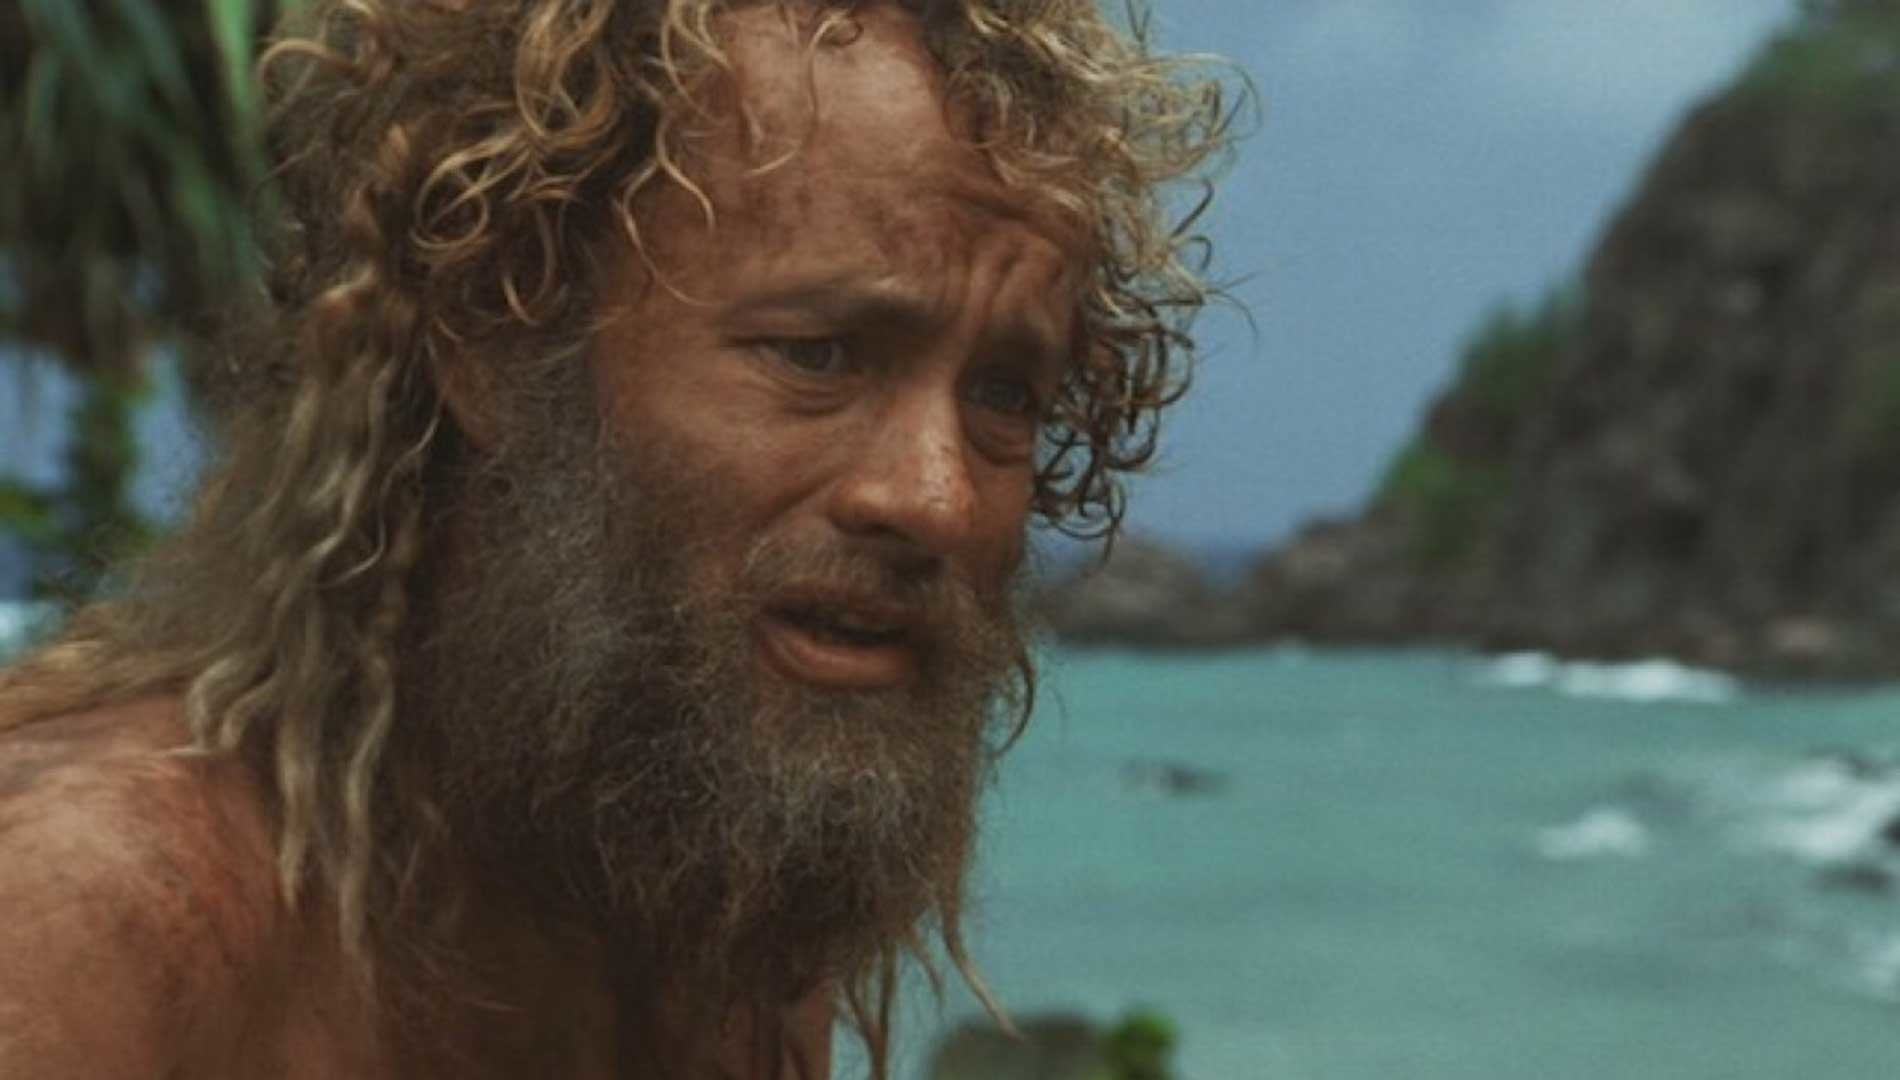 Modern days Robinson Crusoe in 'Cast Away' movie (2000)